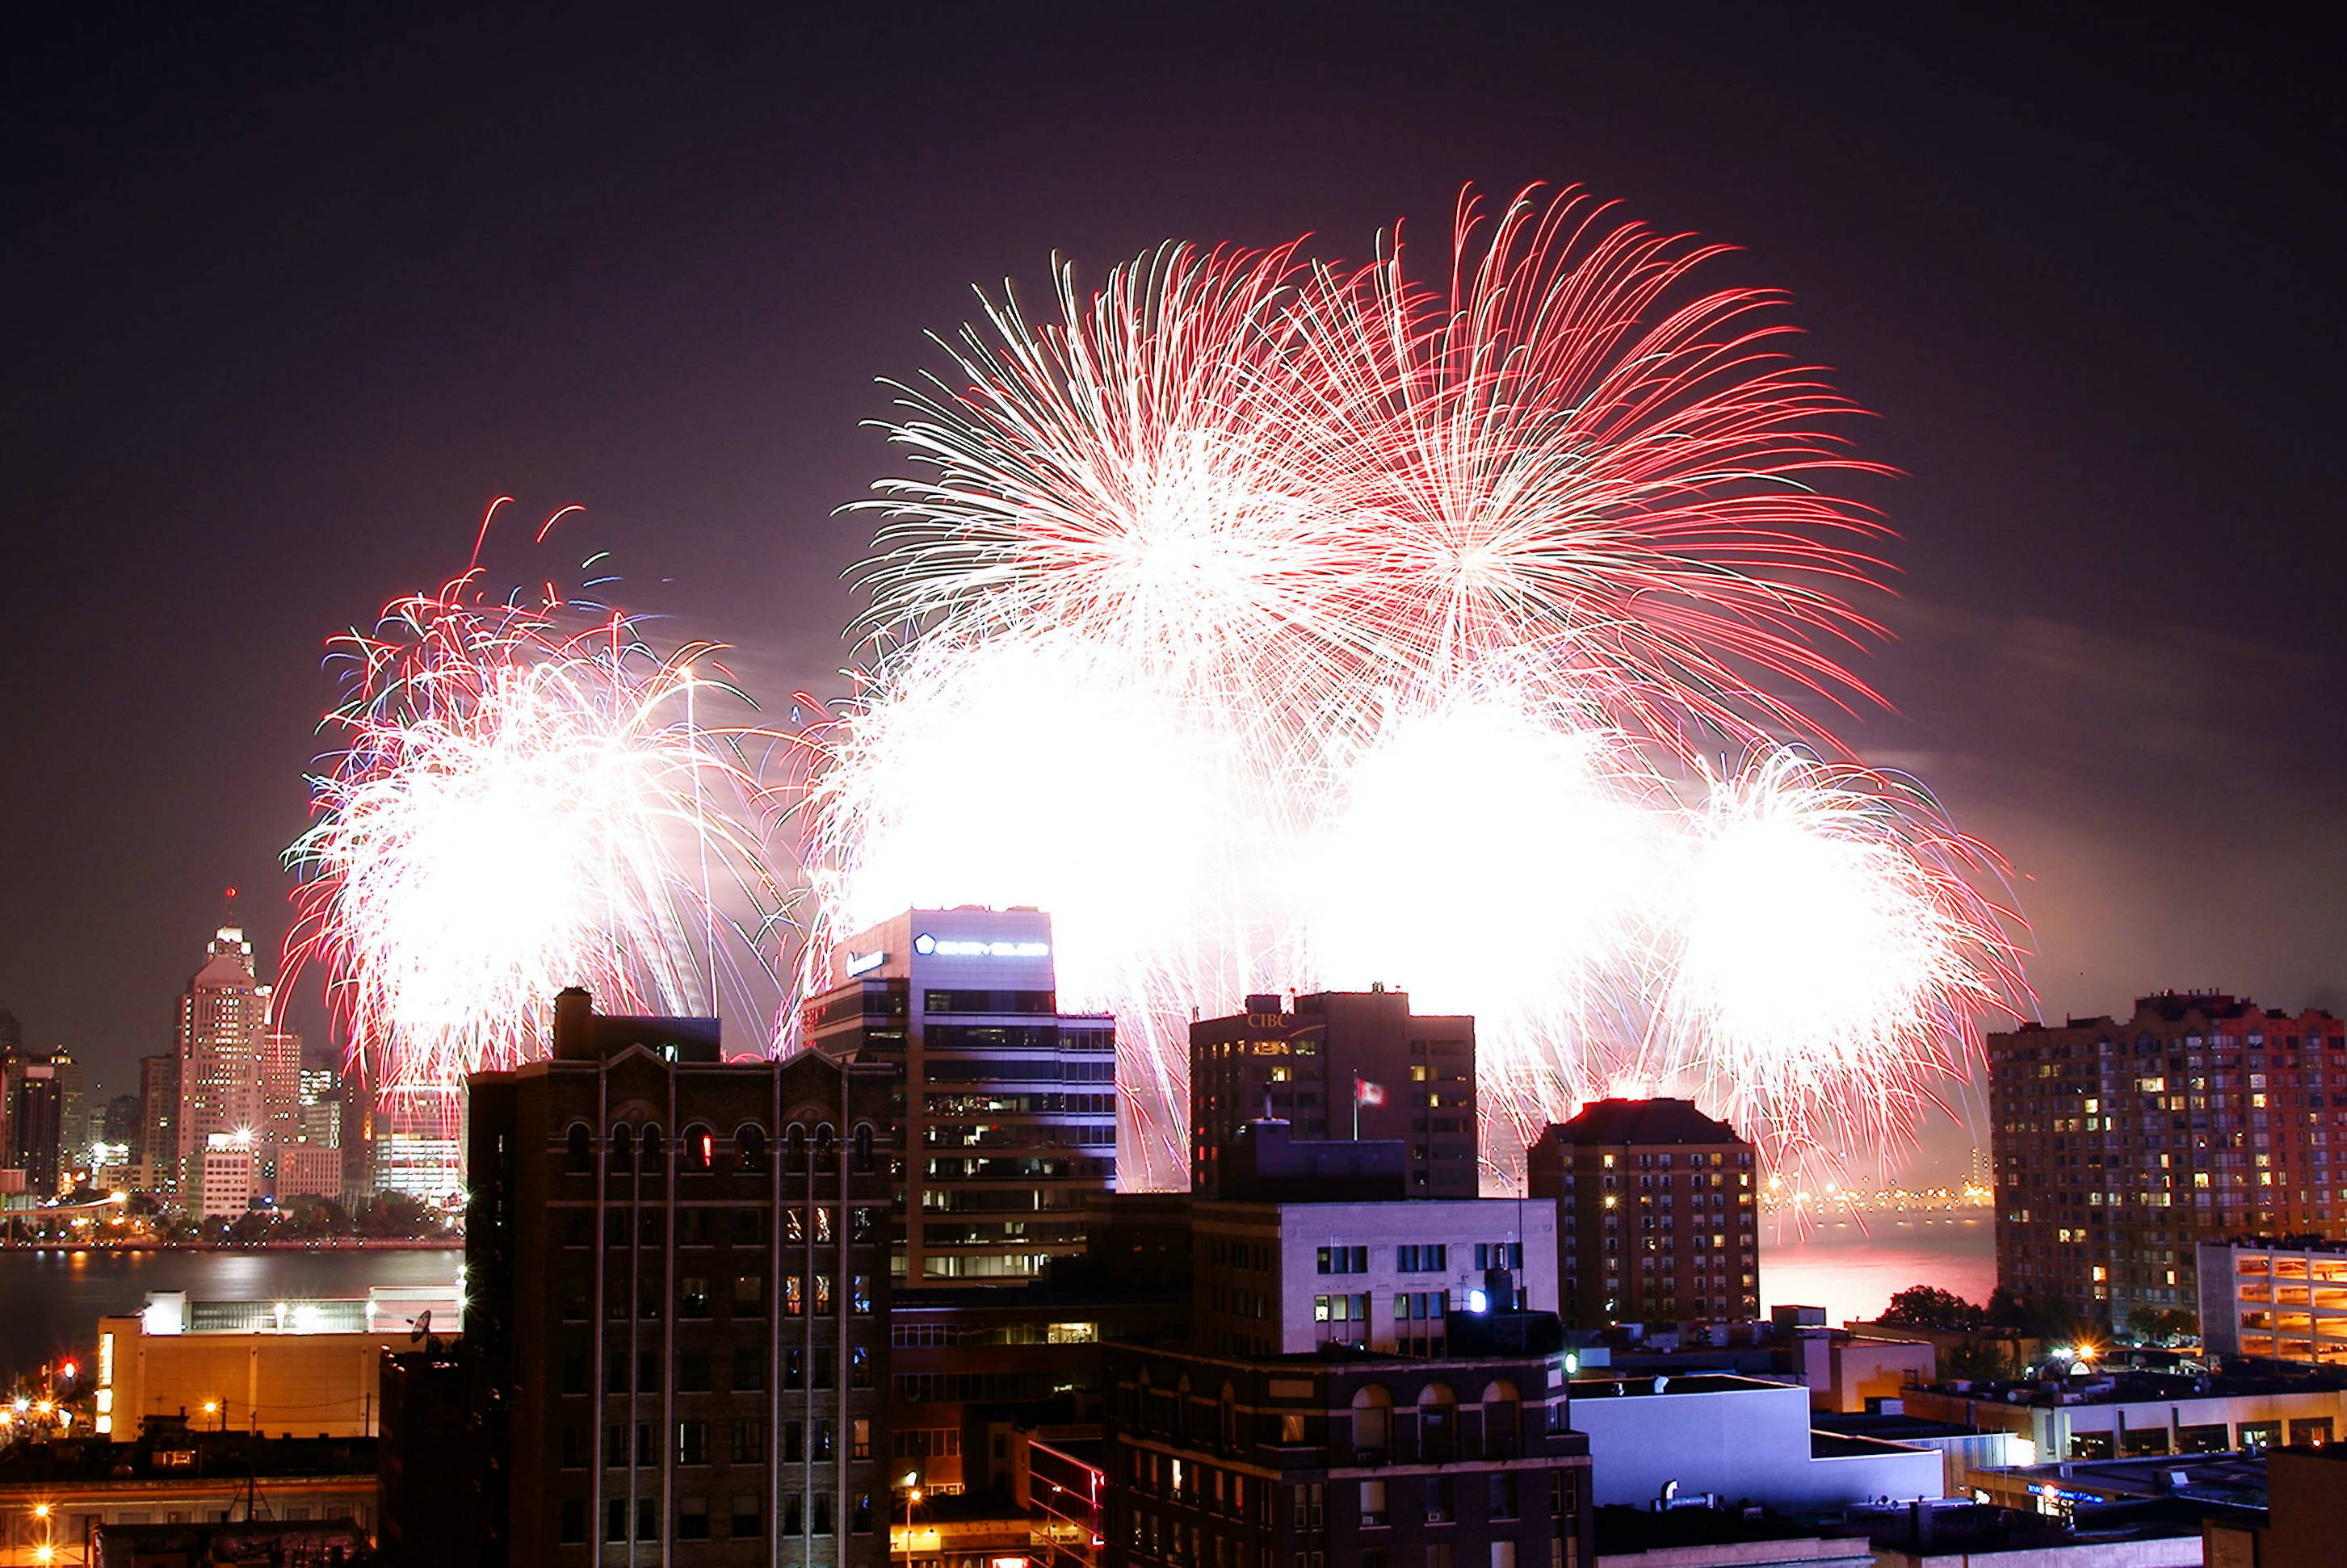 PHOTOS Fireworks Shower The Skies Over Windsor windsoriteDOTca News